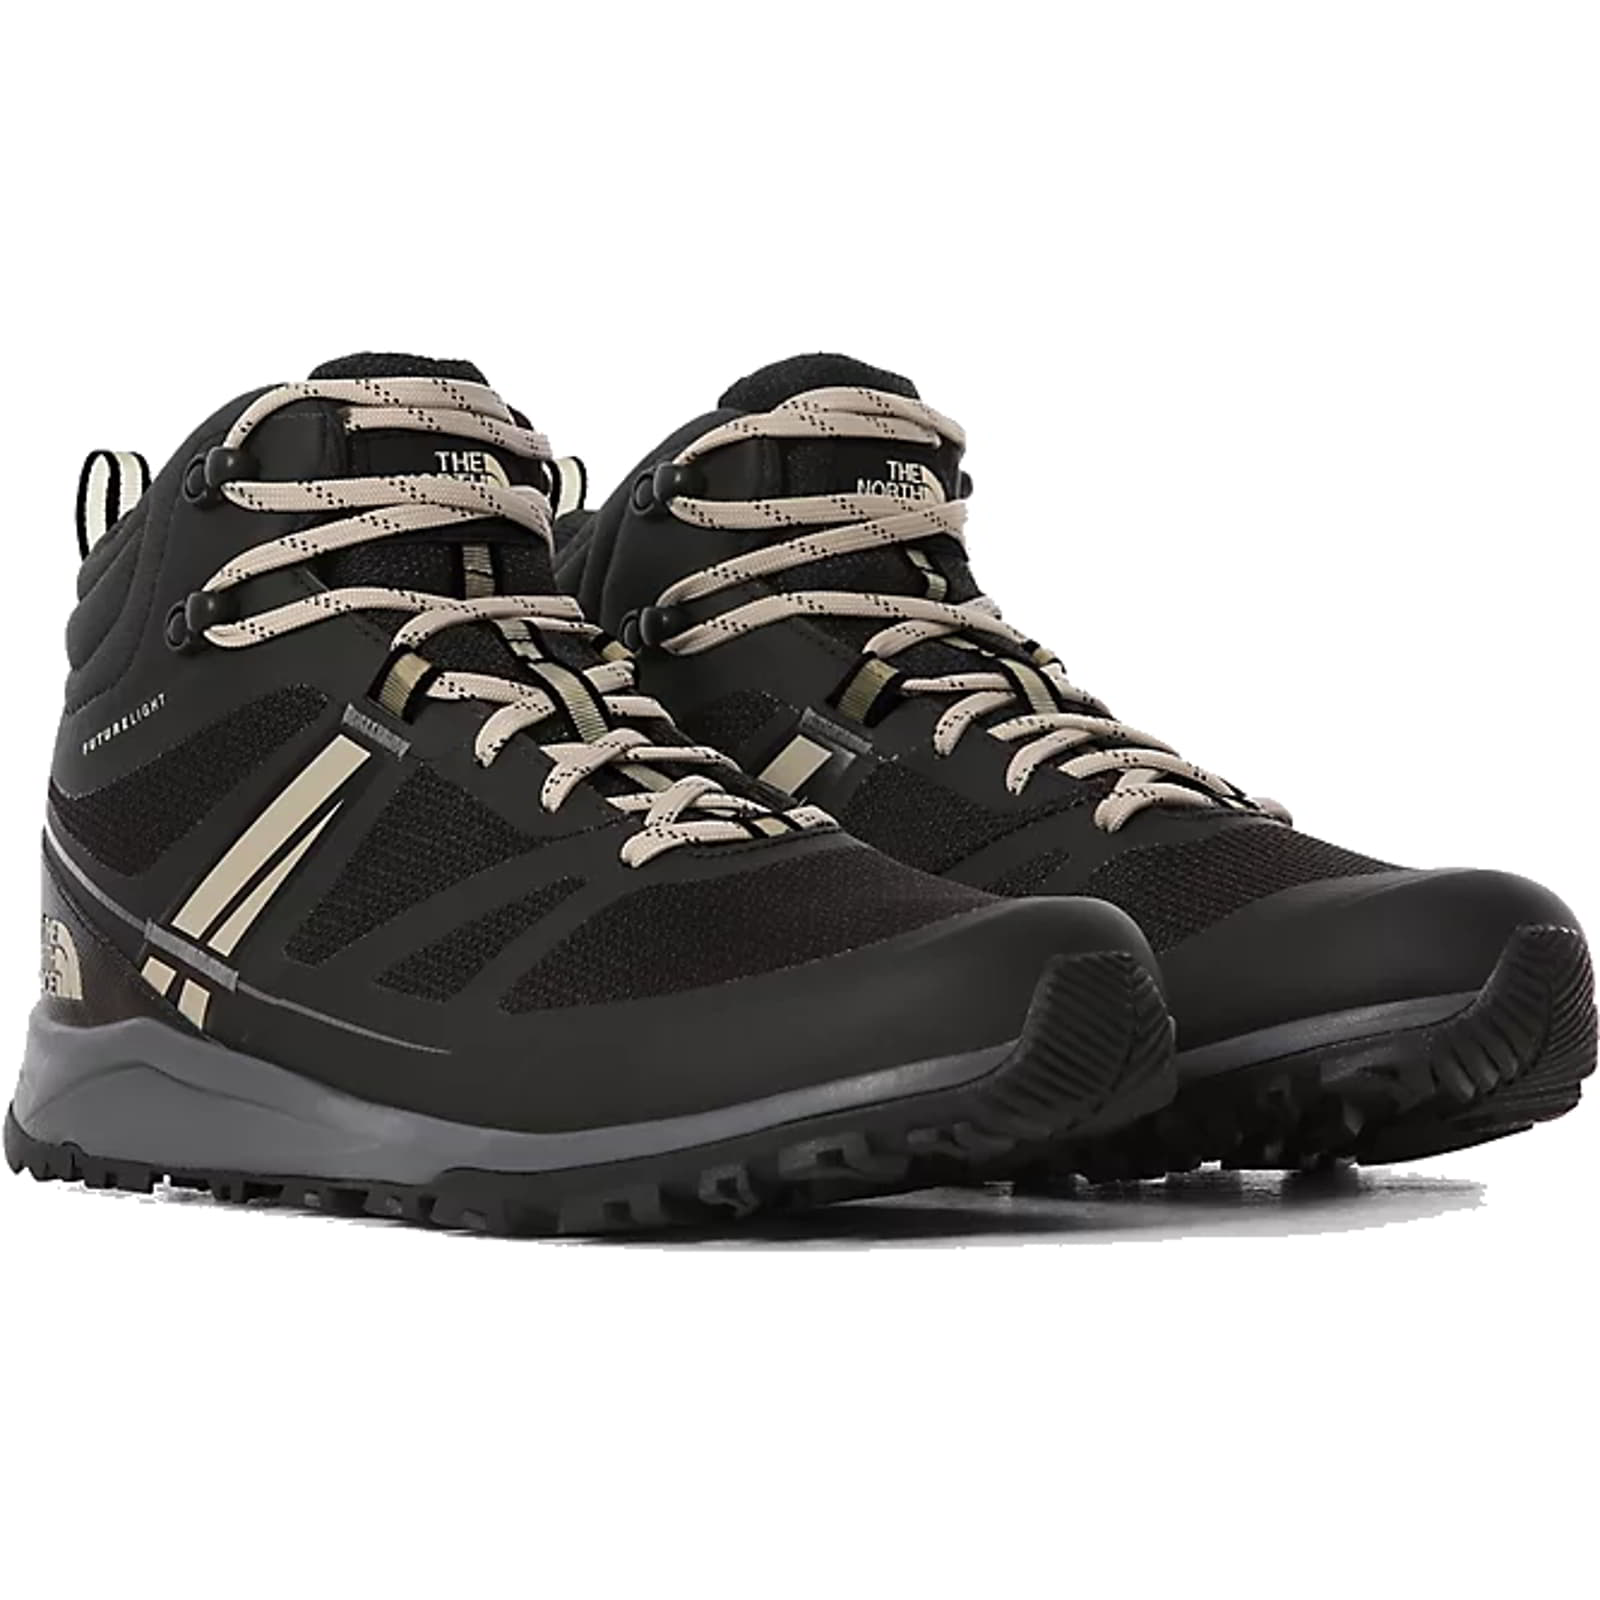 North Face Men's Litewave Mid Futurelight Waterproof Walking Ankle Boots - UK 10 / US 11